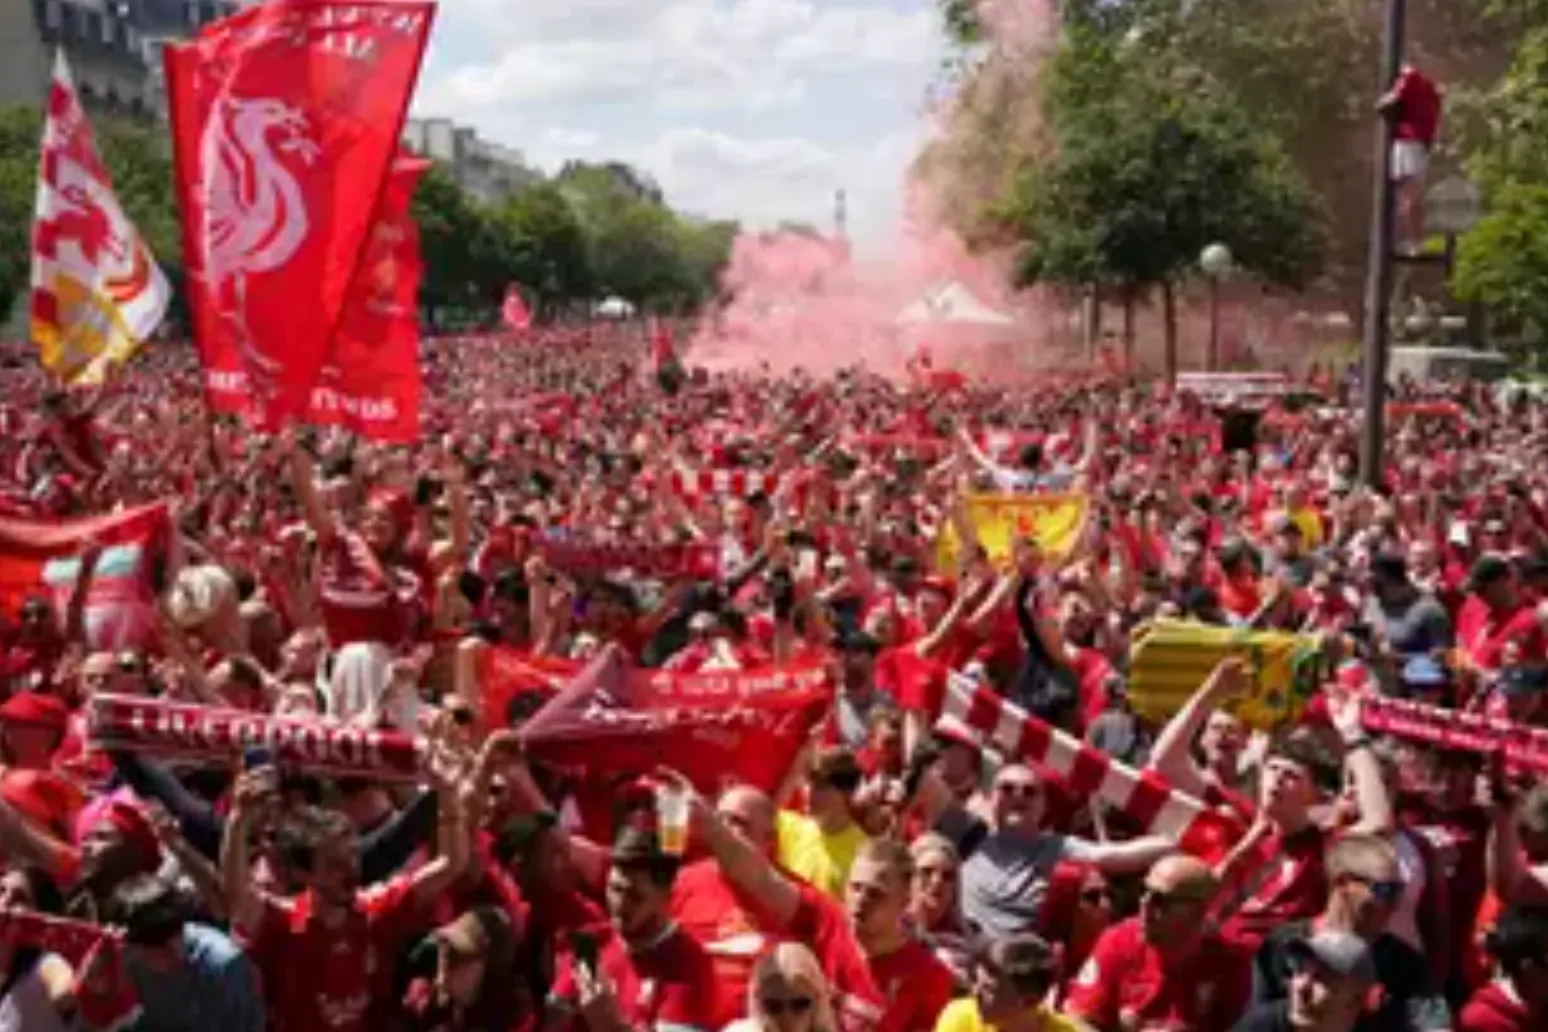 Liverpool fans flood into Paris ahead of Real Madrid showdown 